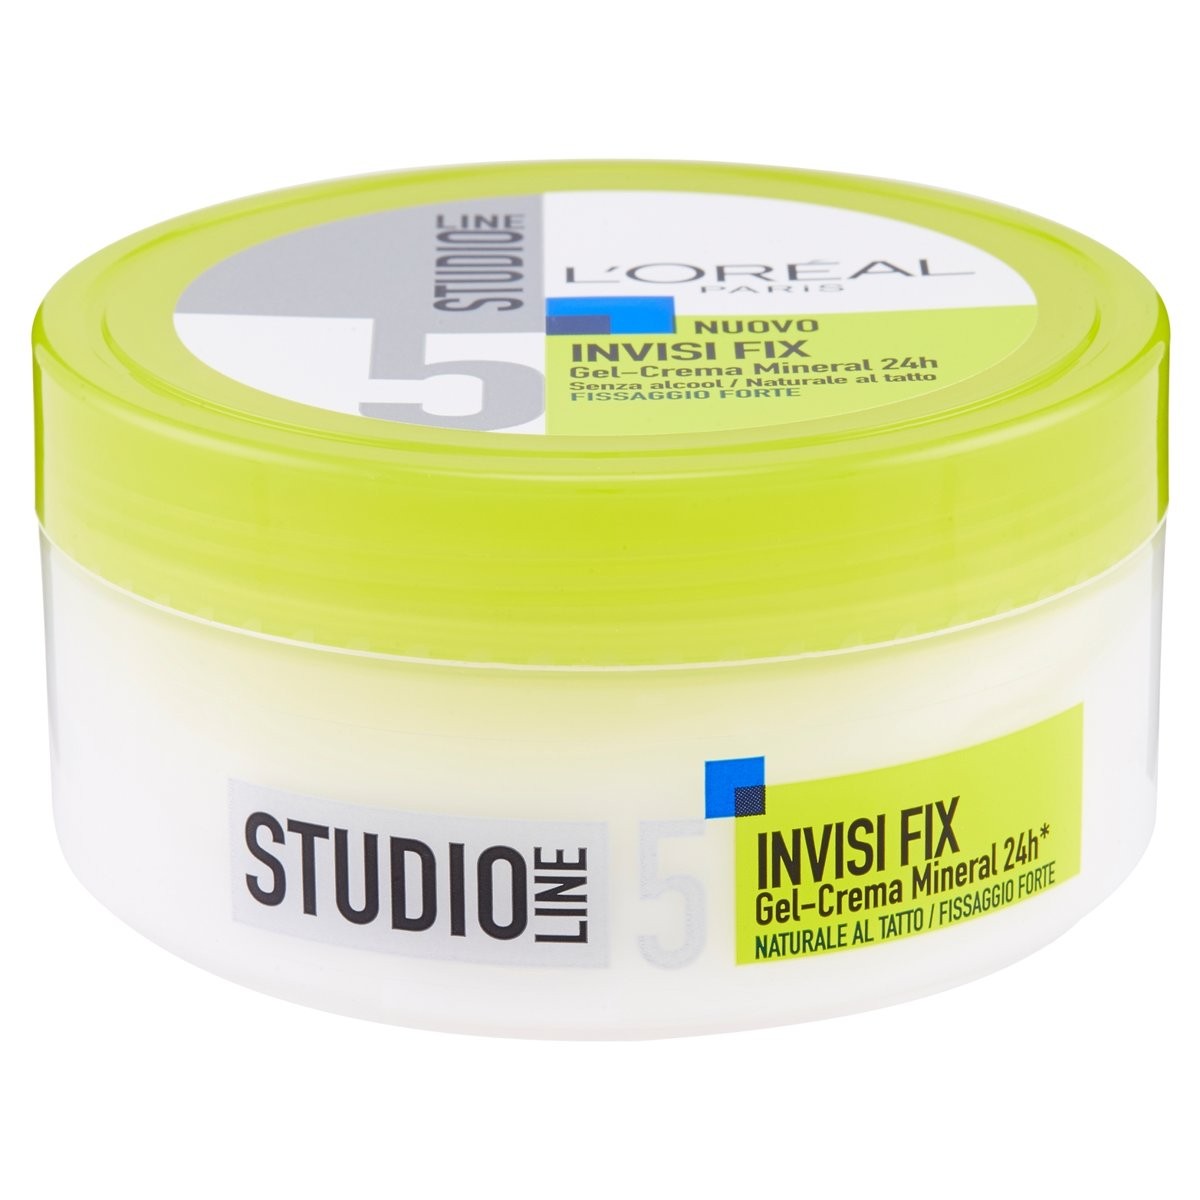 Studio Line L'Oréal Paris Gel-crema per capelli Mineral FX Modellante